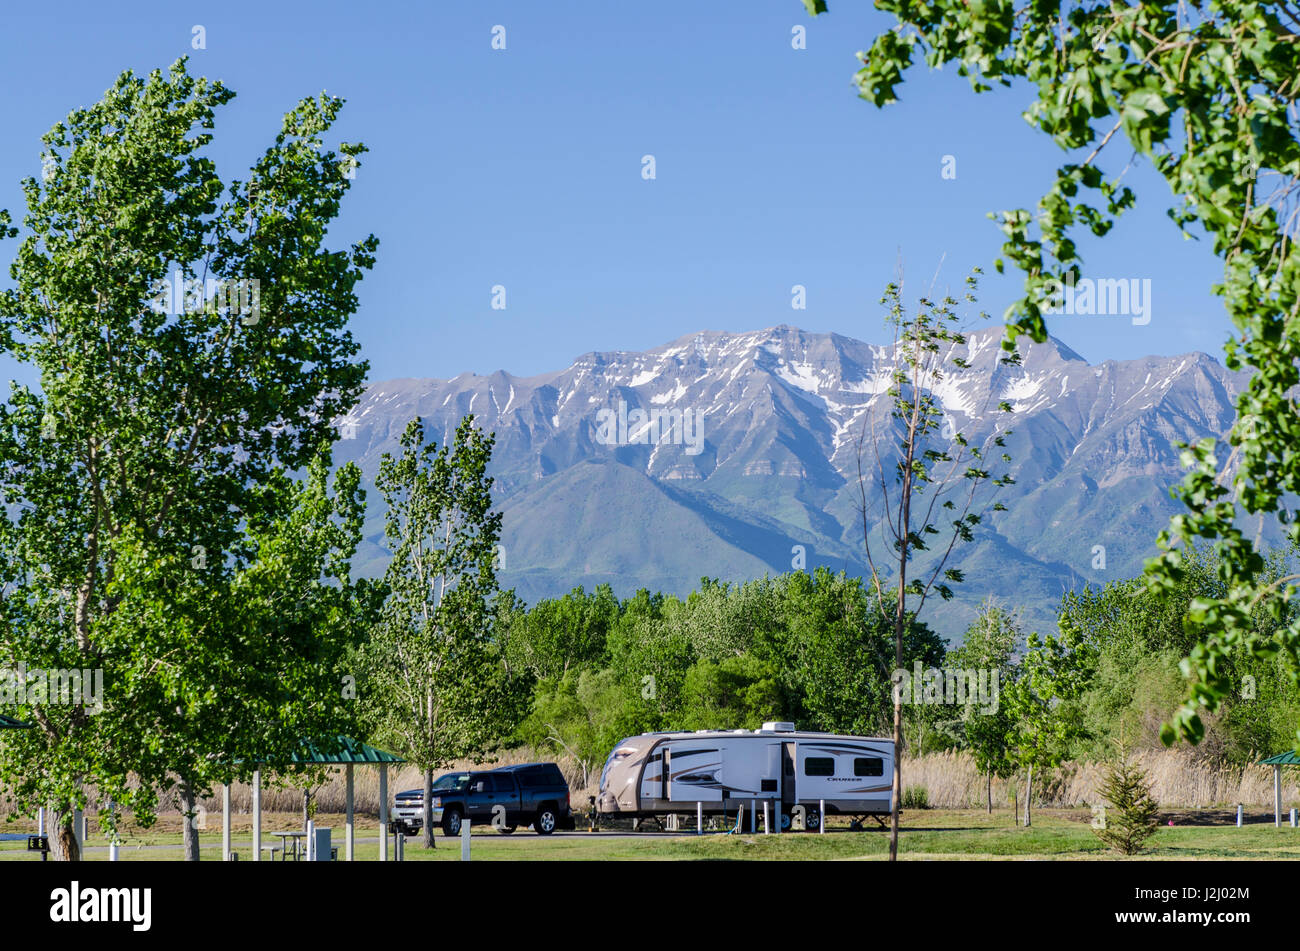 Utah Lake State Park Group Campground